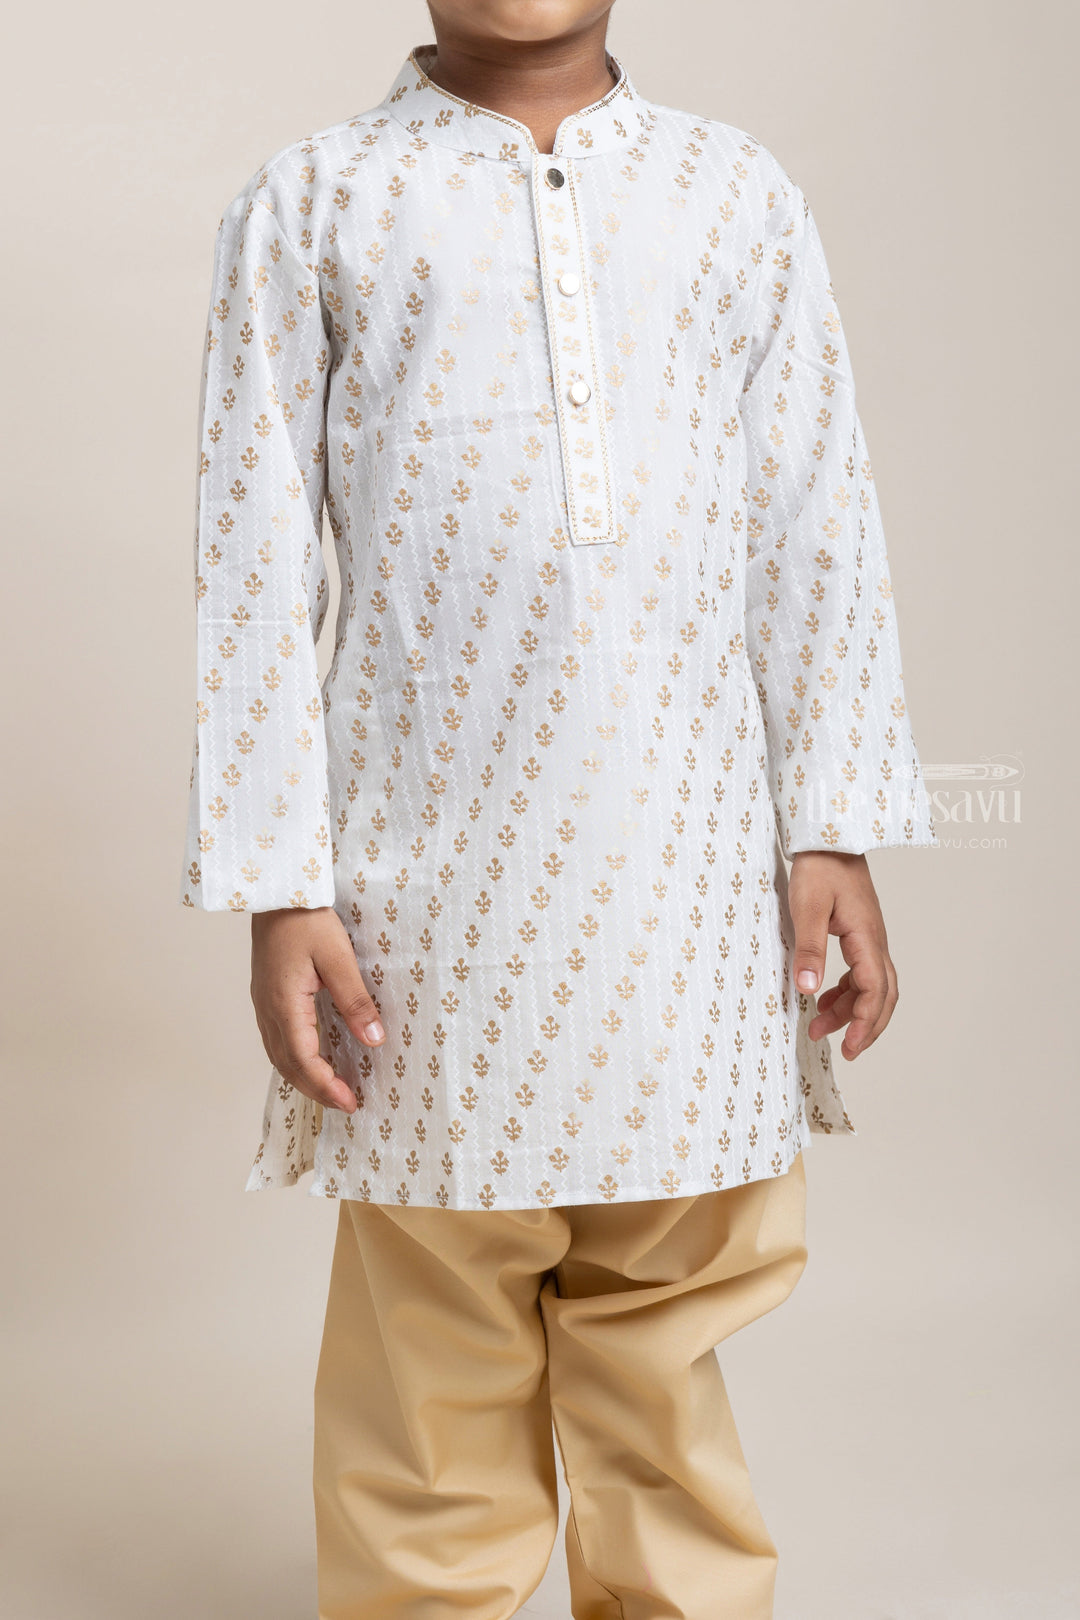 The Nesavu Boys Kurtha Set Fashionable Butta printed White Kurta With Contrast Pant For Little Boys Nesavu Fashionable Ethnic Wear For Boys | Latest Kurta Collection | The Nesavu